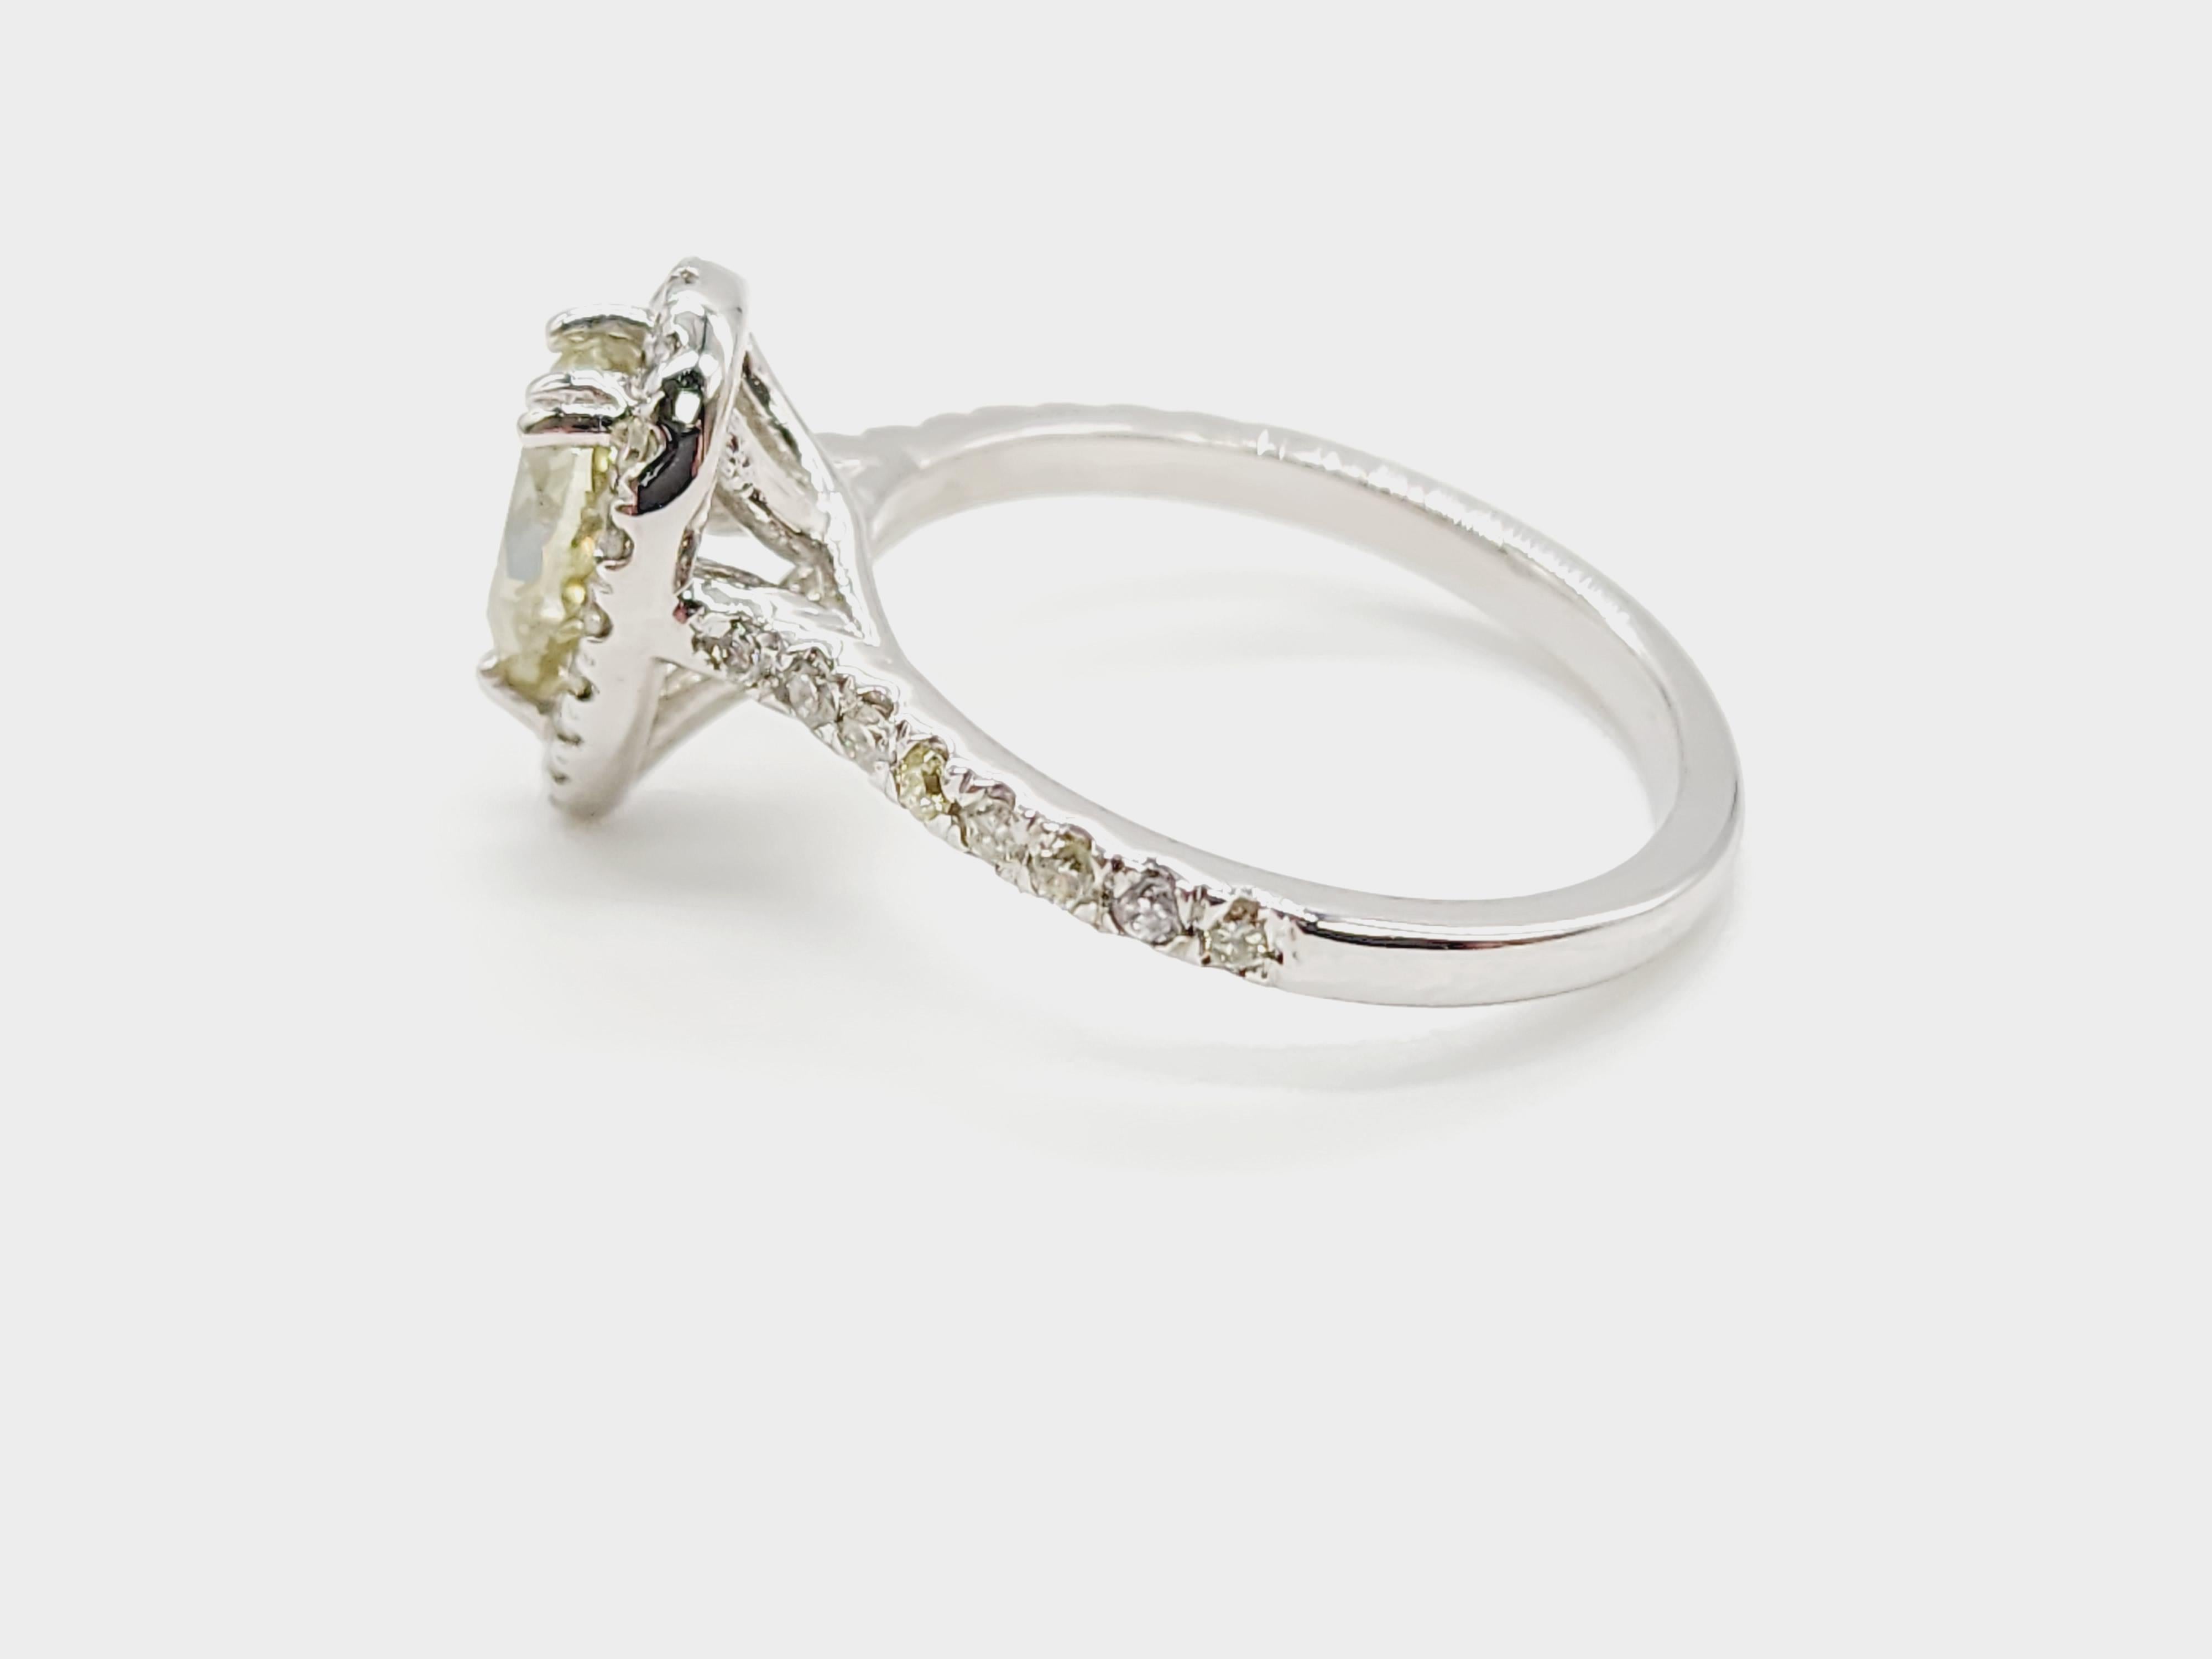 Women's GIA CHAMELEON 1.11 Carat Pear Shape Fancy Yellow Diamond Ring 14K White Gold